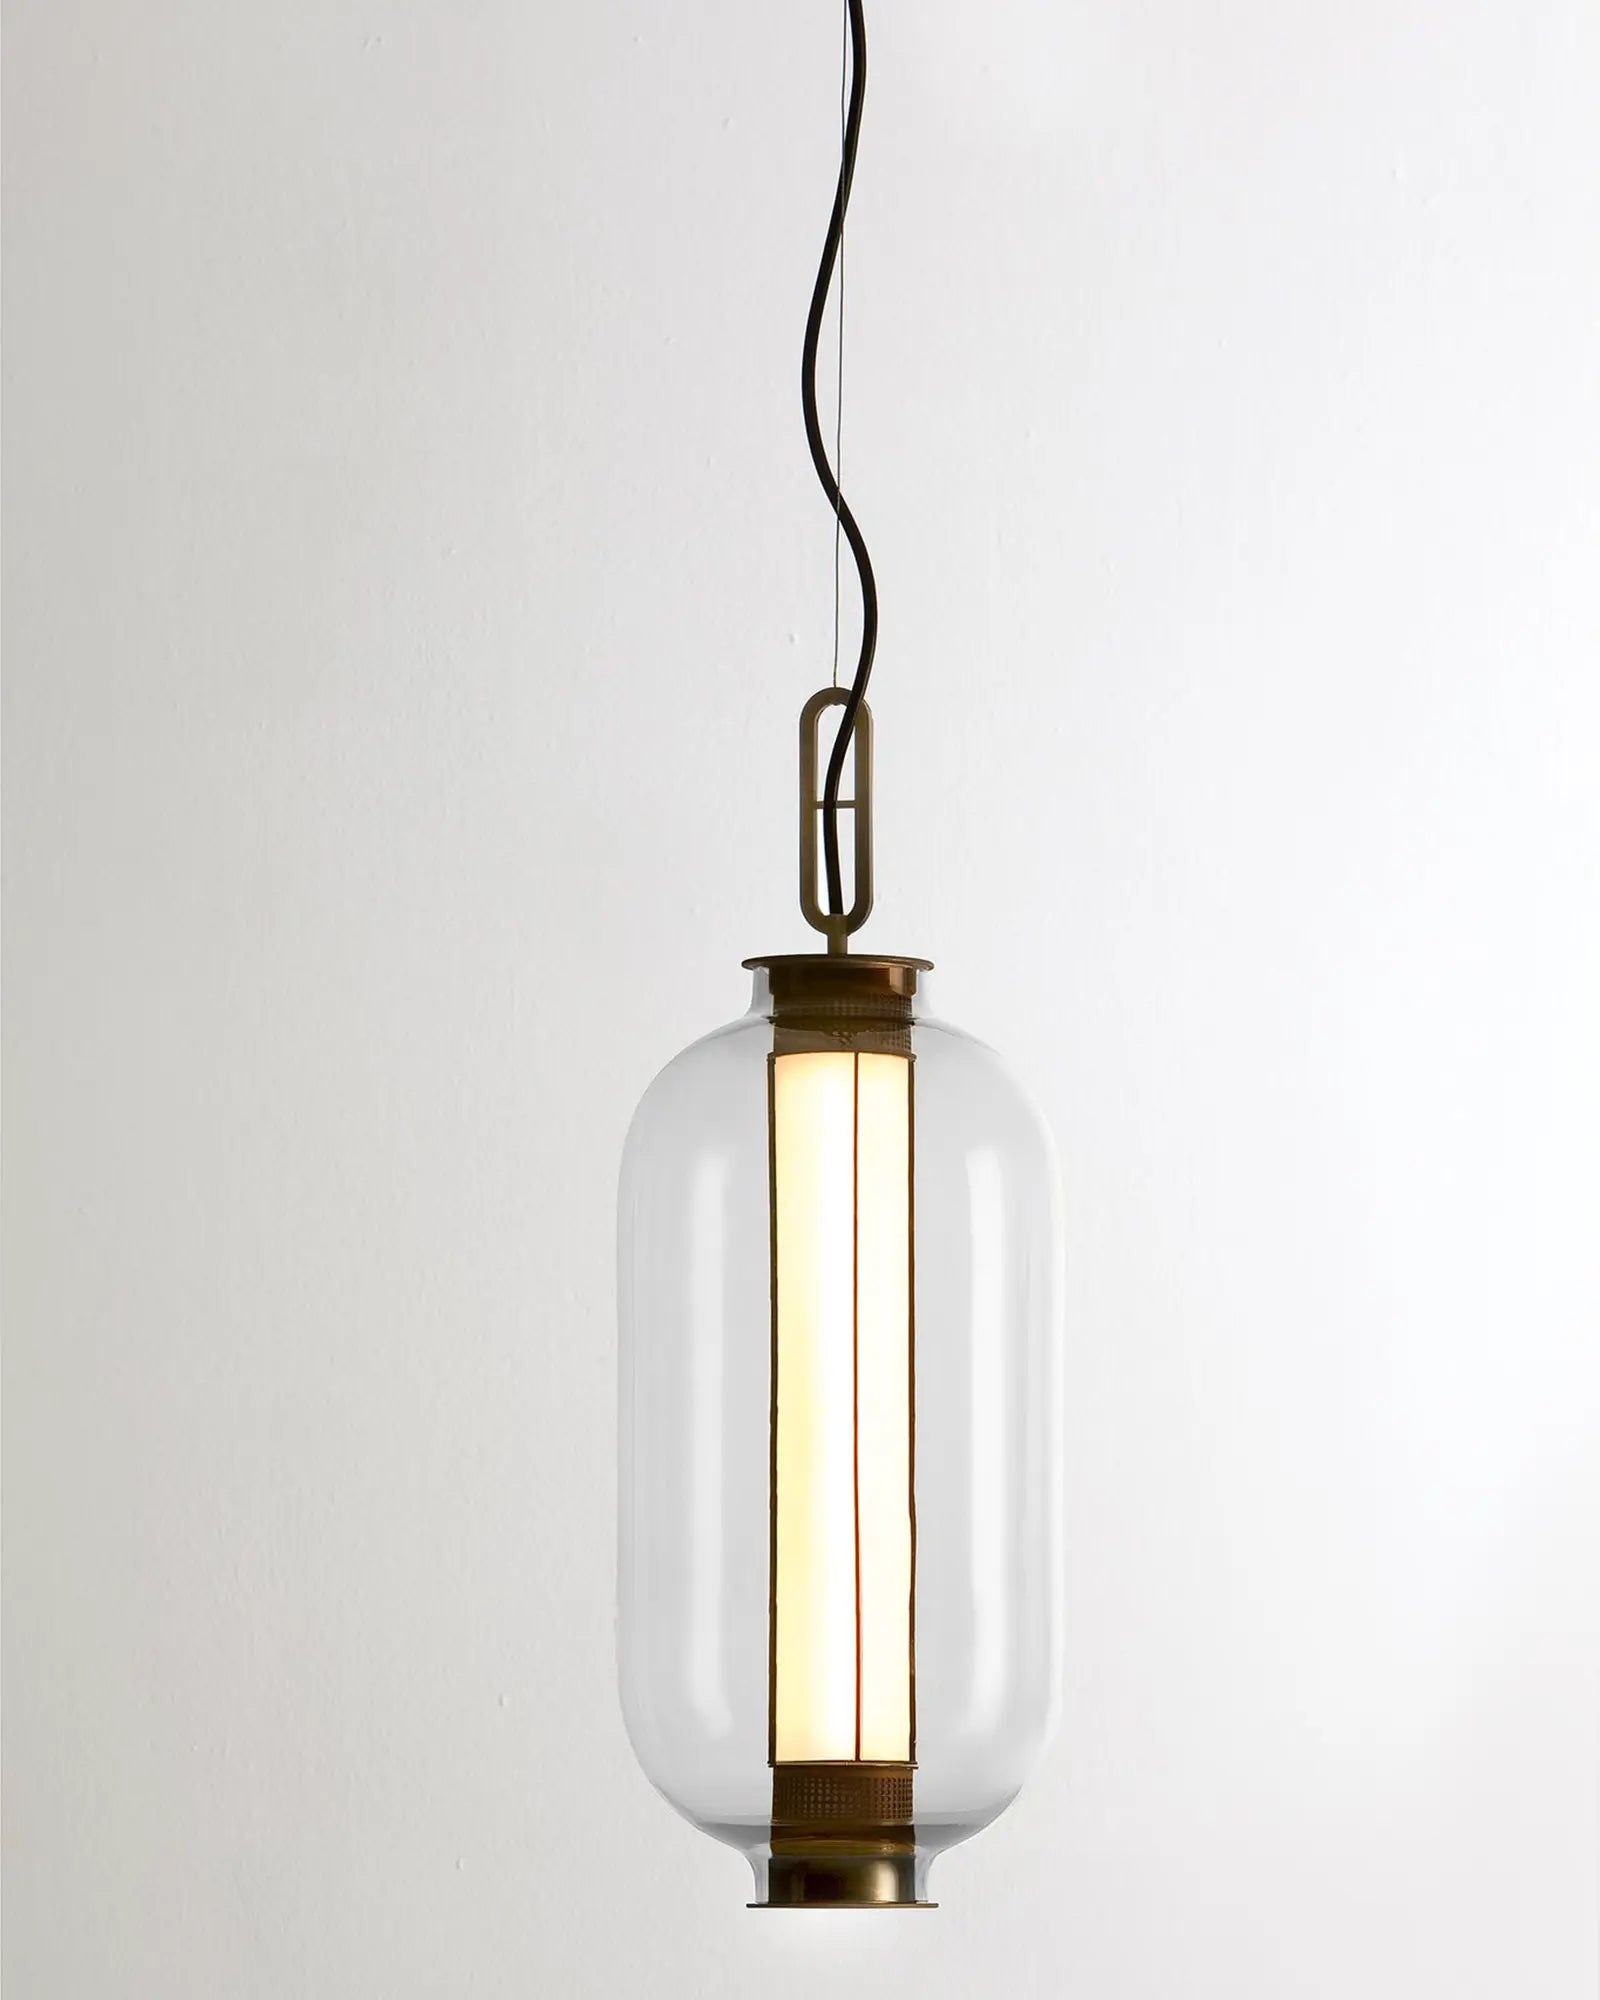 Bai Ba Ba tall bronze and blown glass Chinese lantern style pendant light transparent glass